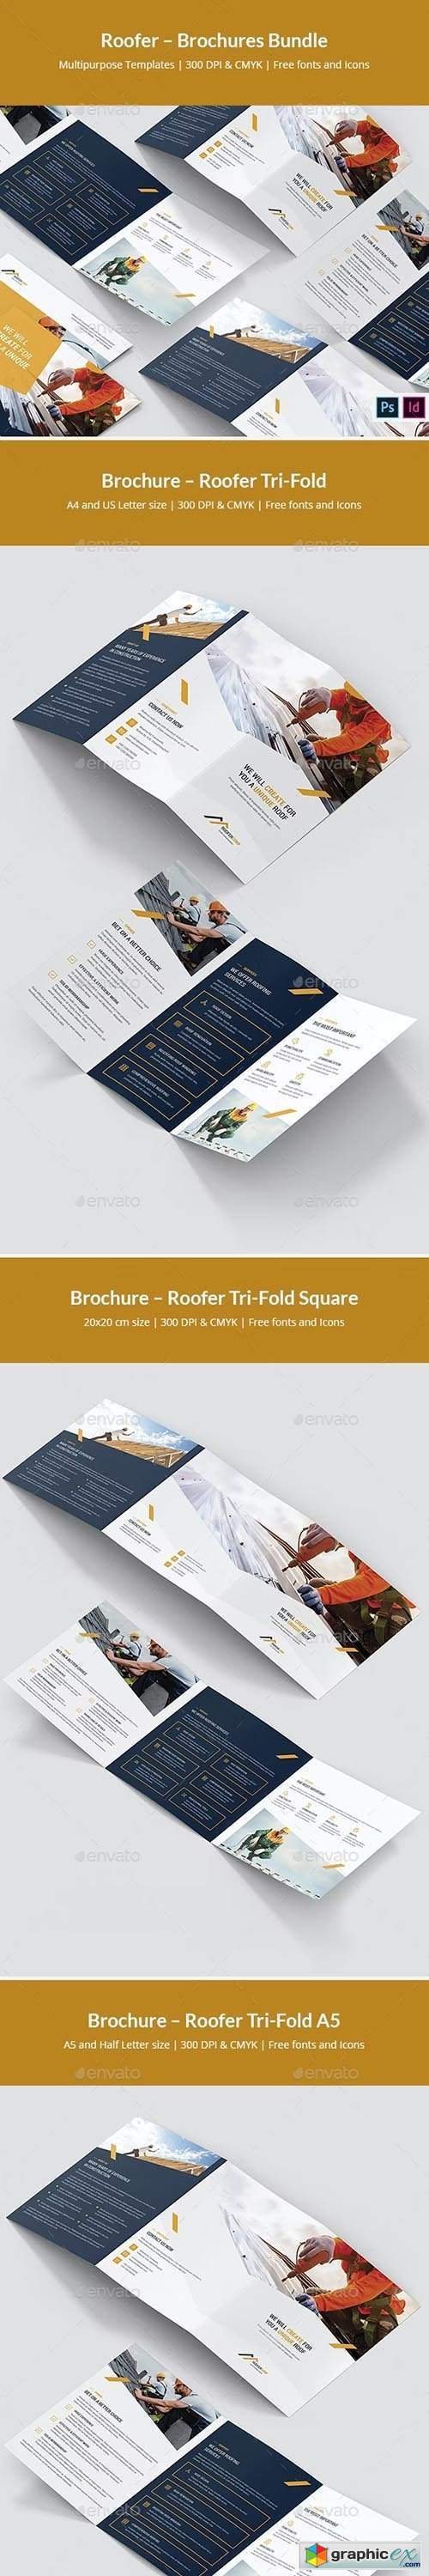 Roofer – Brochures Bundle Print Templates 7 in 1